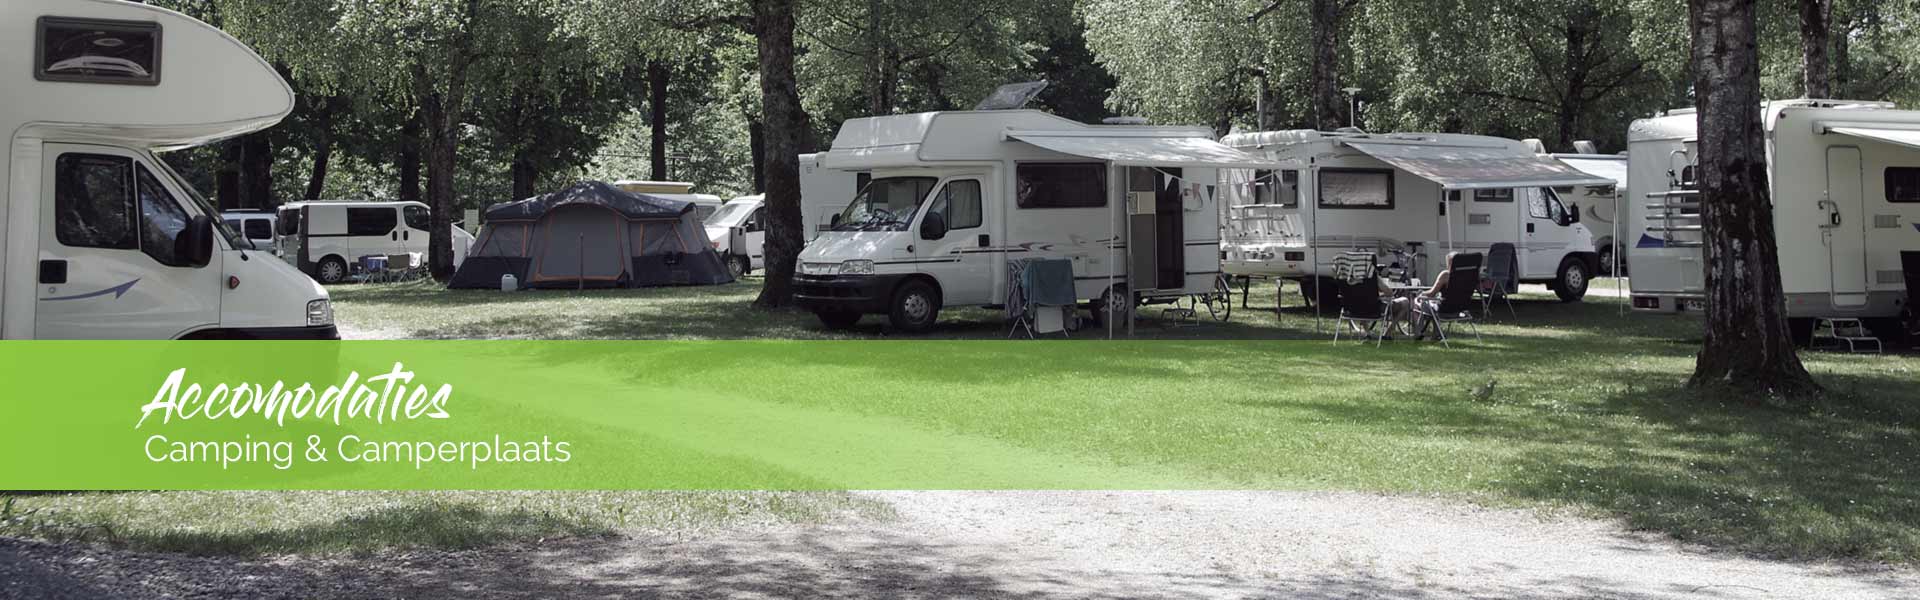 De mooiste staanplaatsen & campings in de Harz